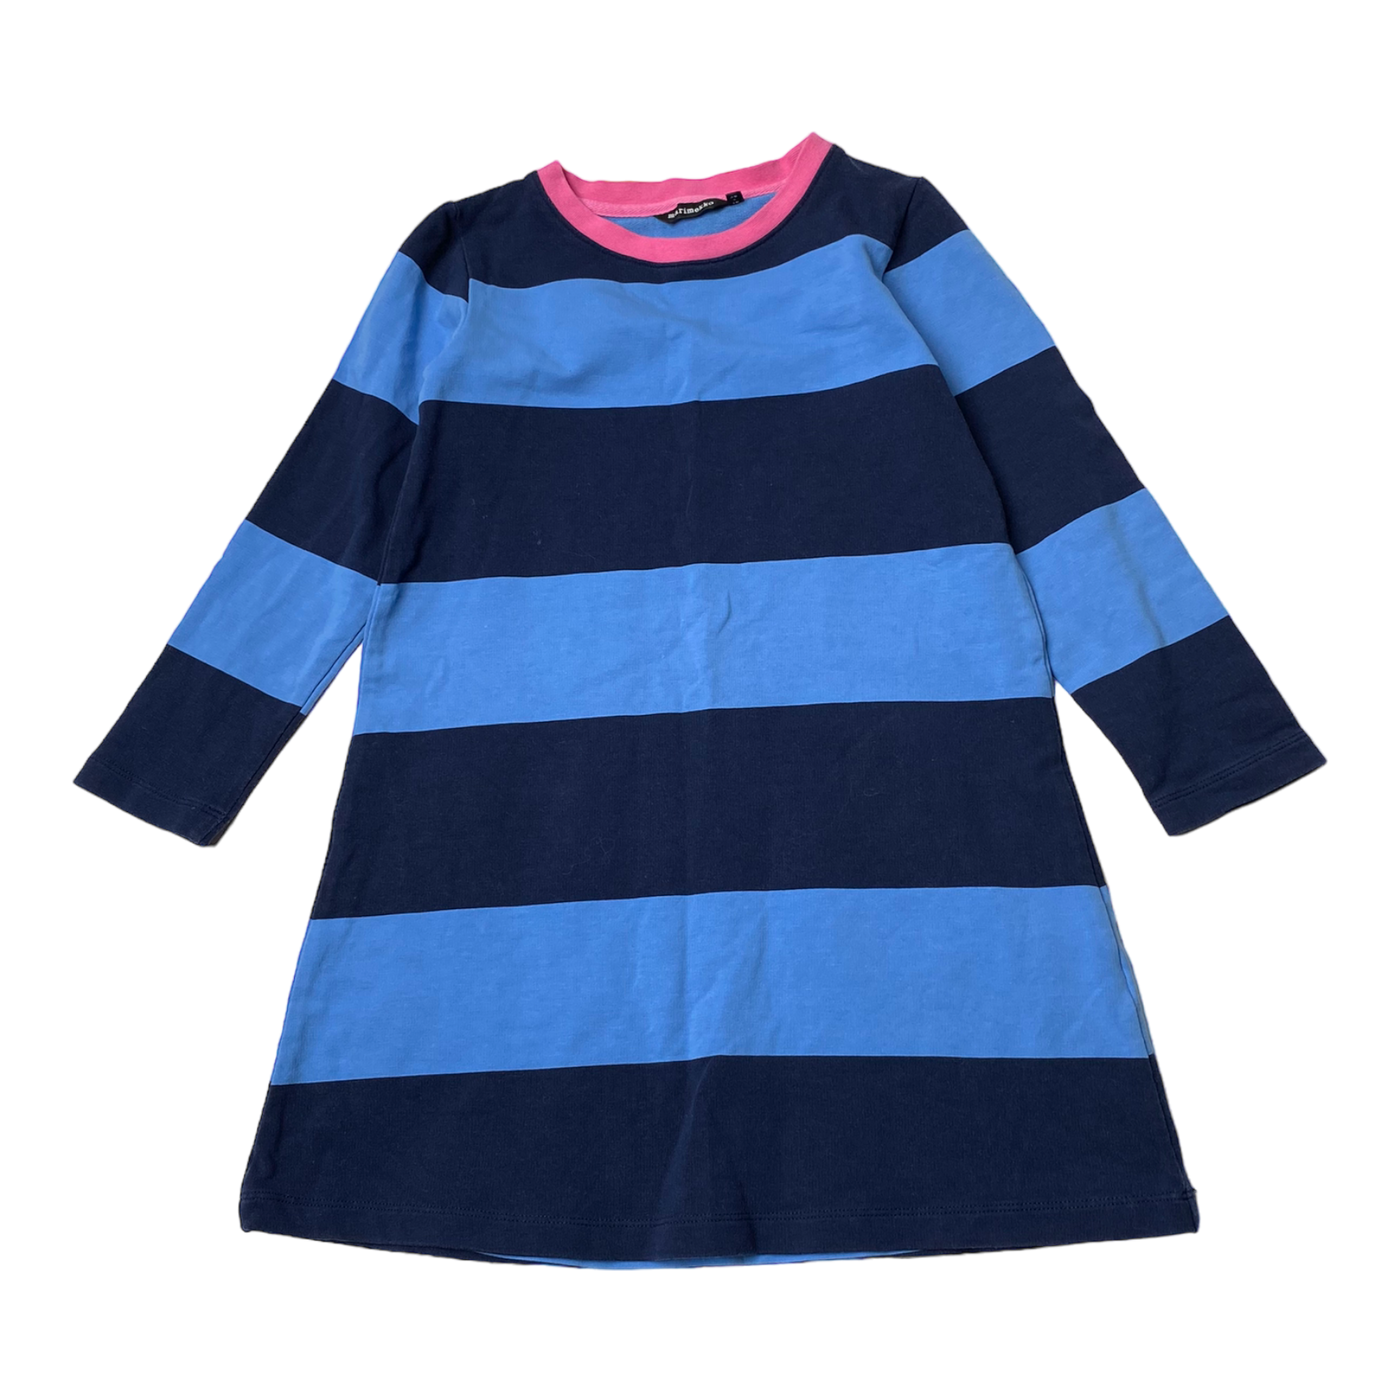 Marimekko uuti dress, stripes | 104/110cm